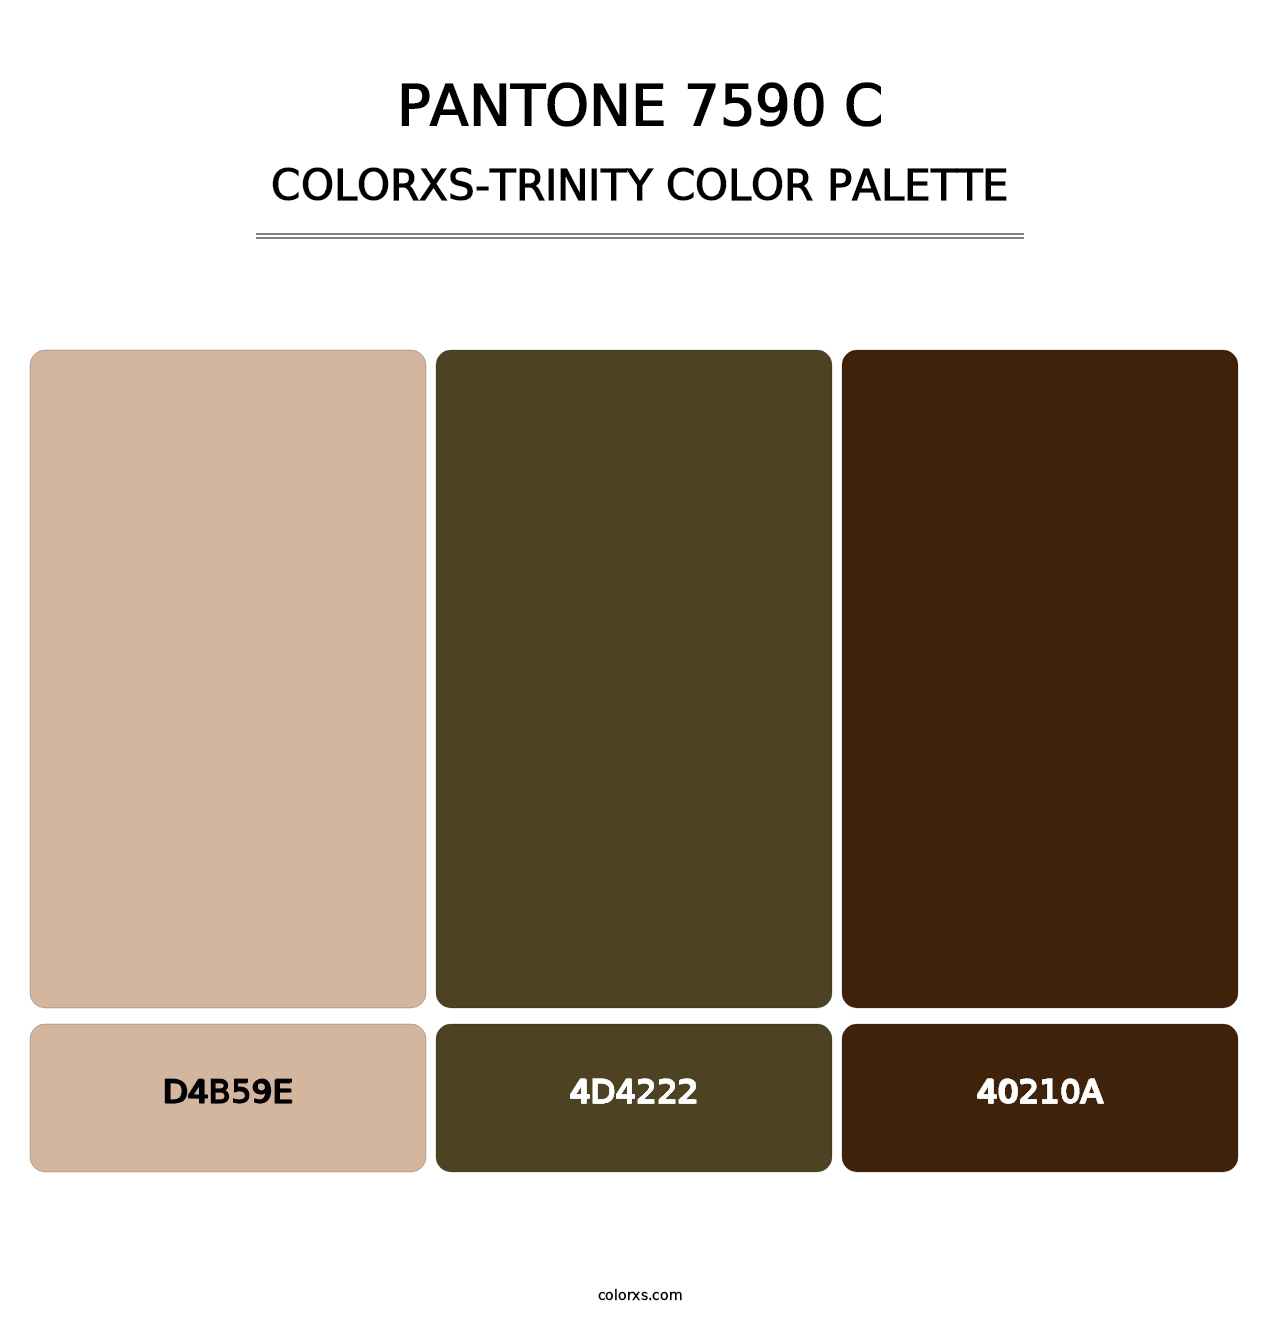 PANTONE 7590 C - Colorxs Trinity Palette